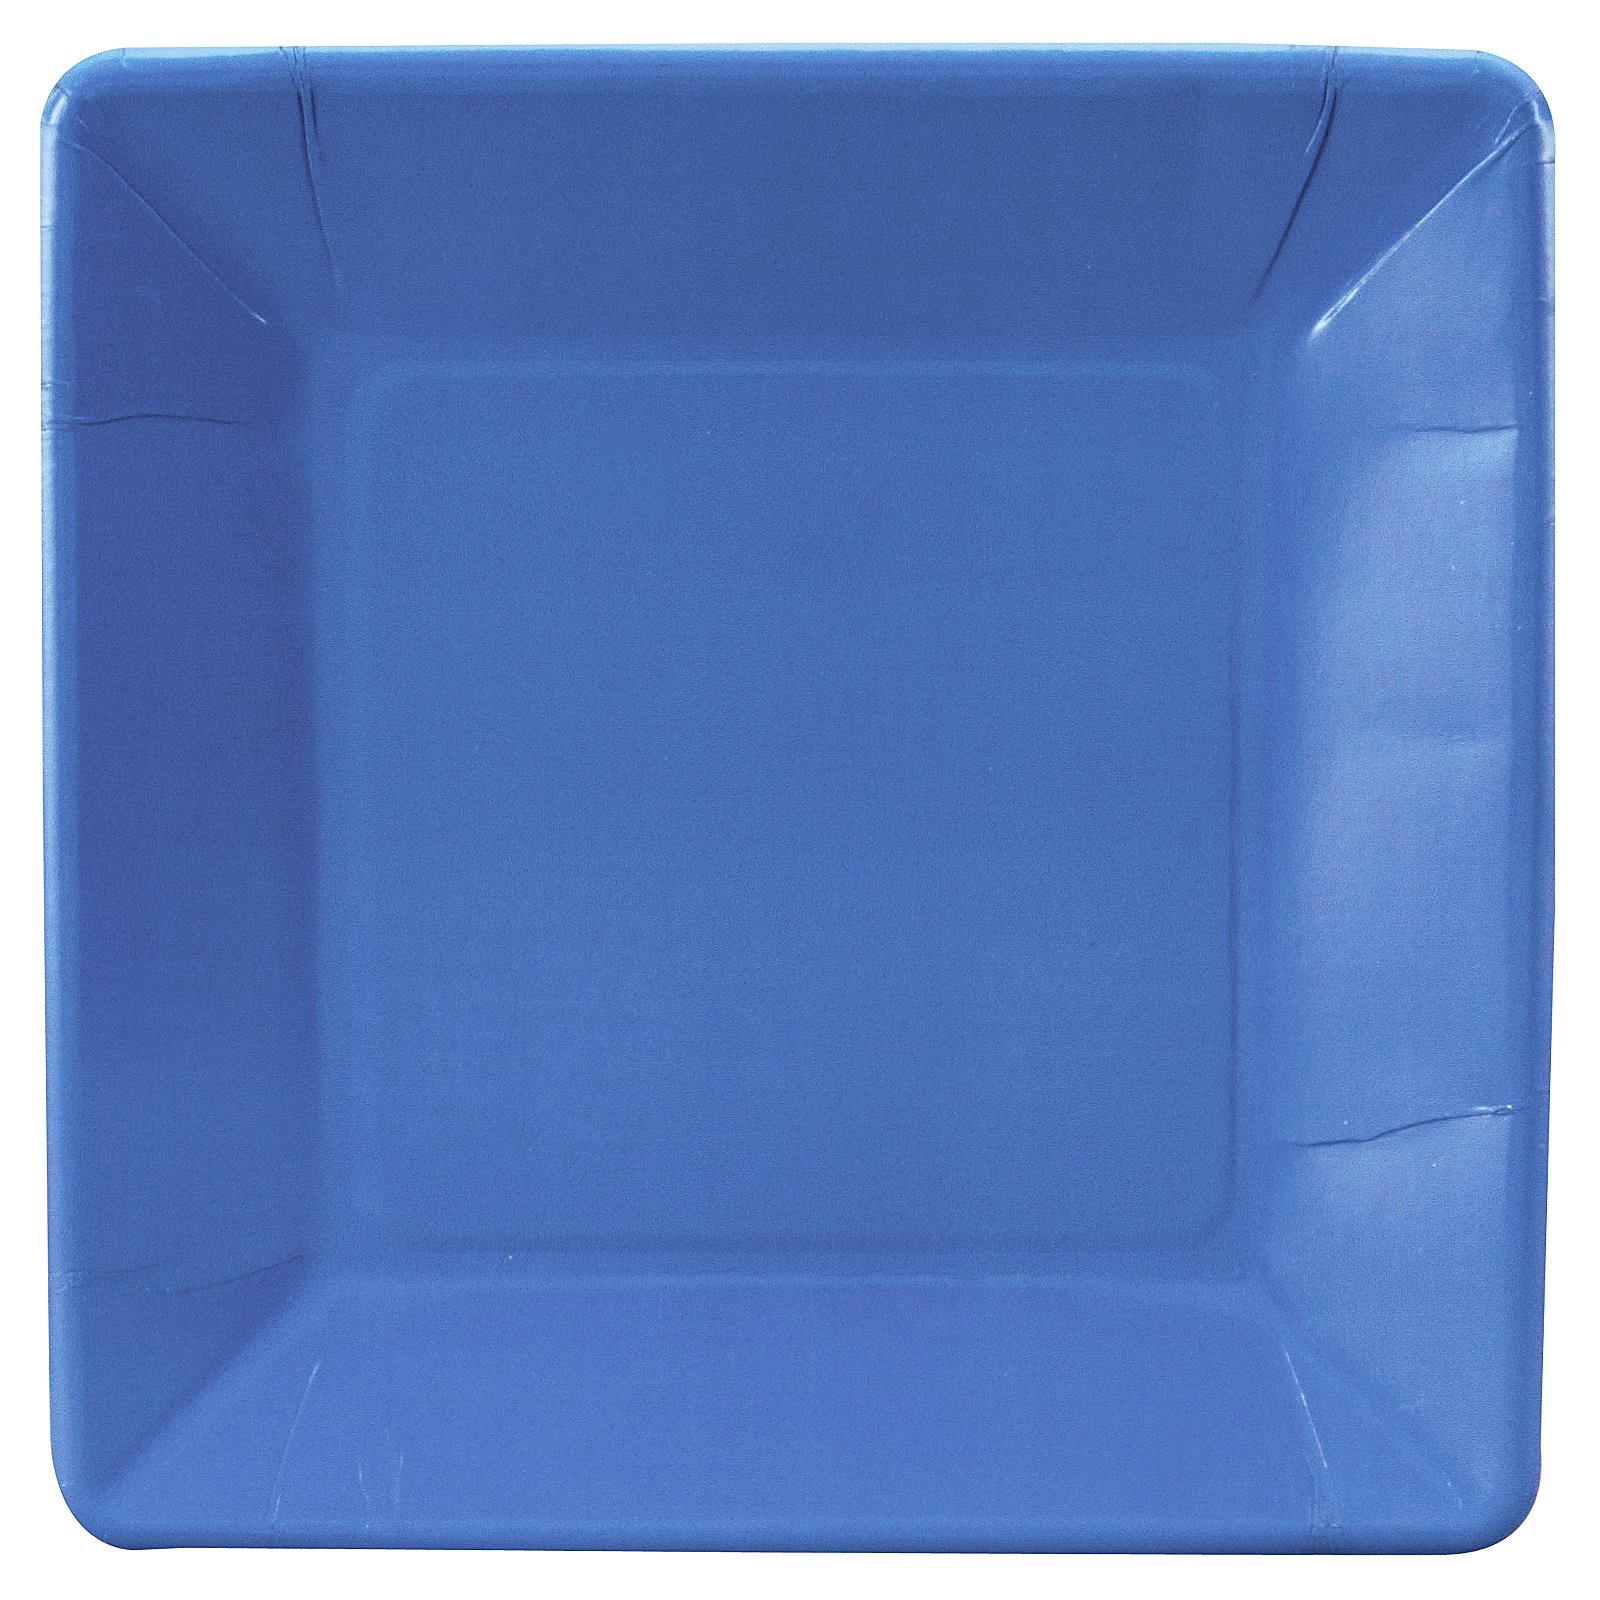 True Blue (Blue) Square Dinner Plates (18 count)